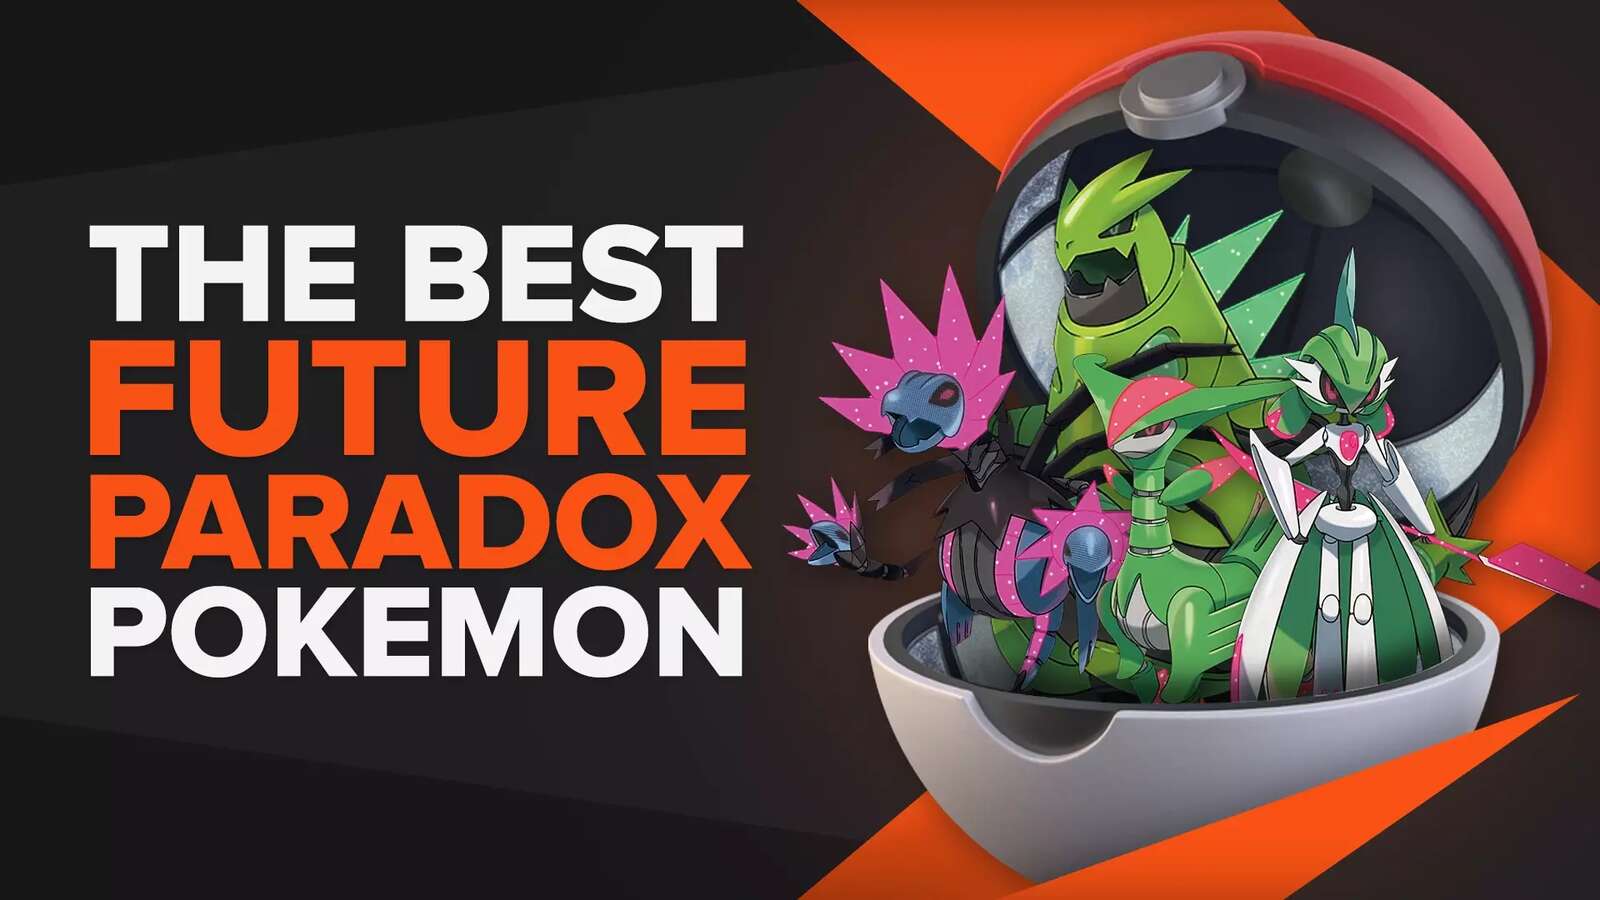 The Best Future Paradox Pokemon [Ranked]